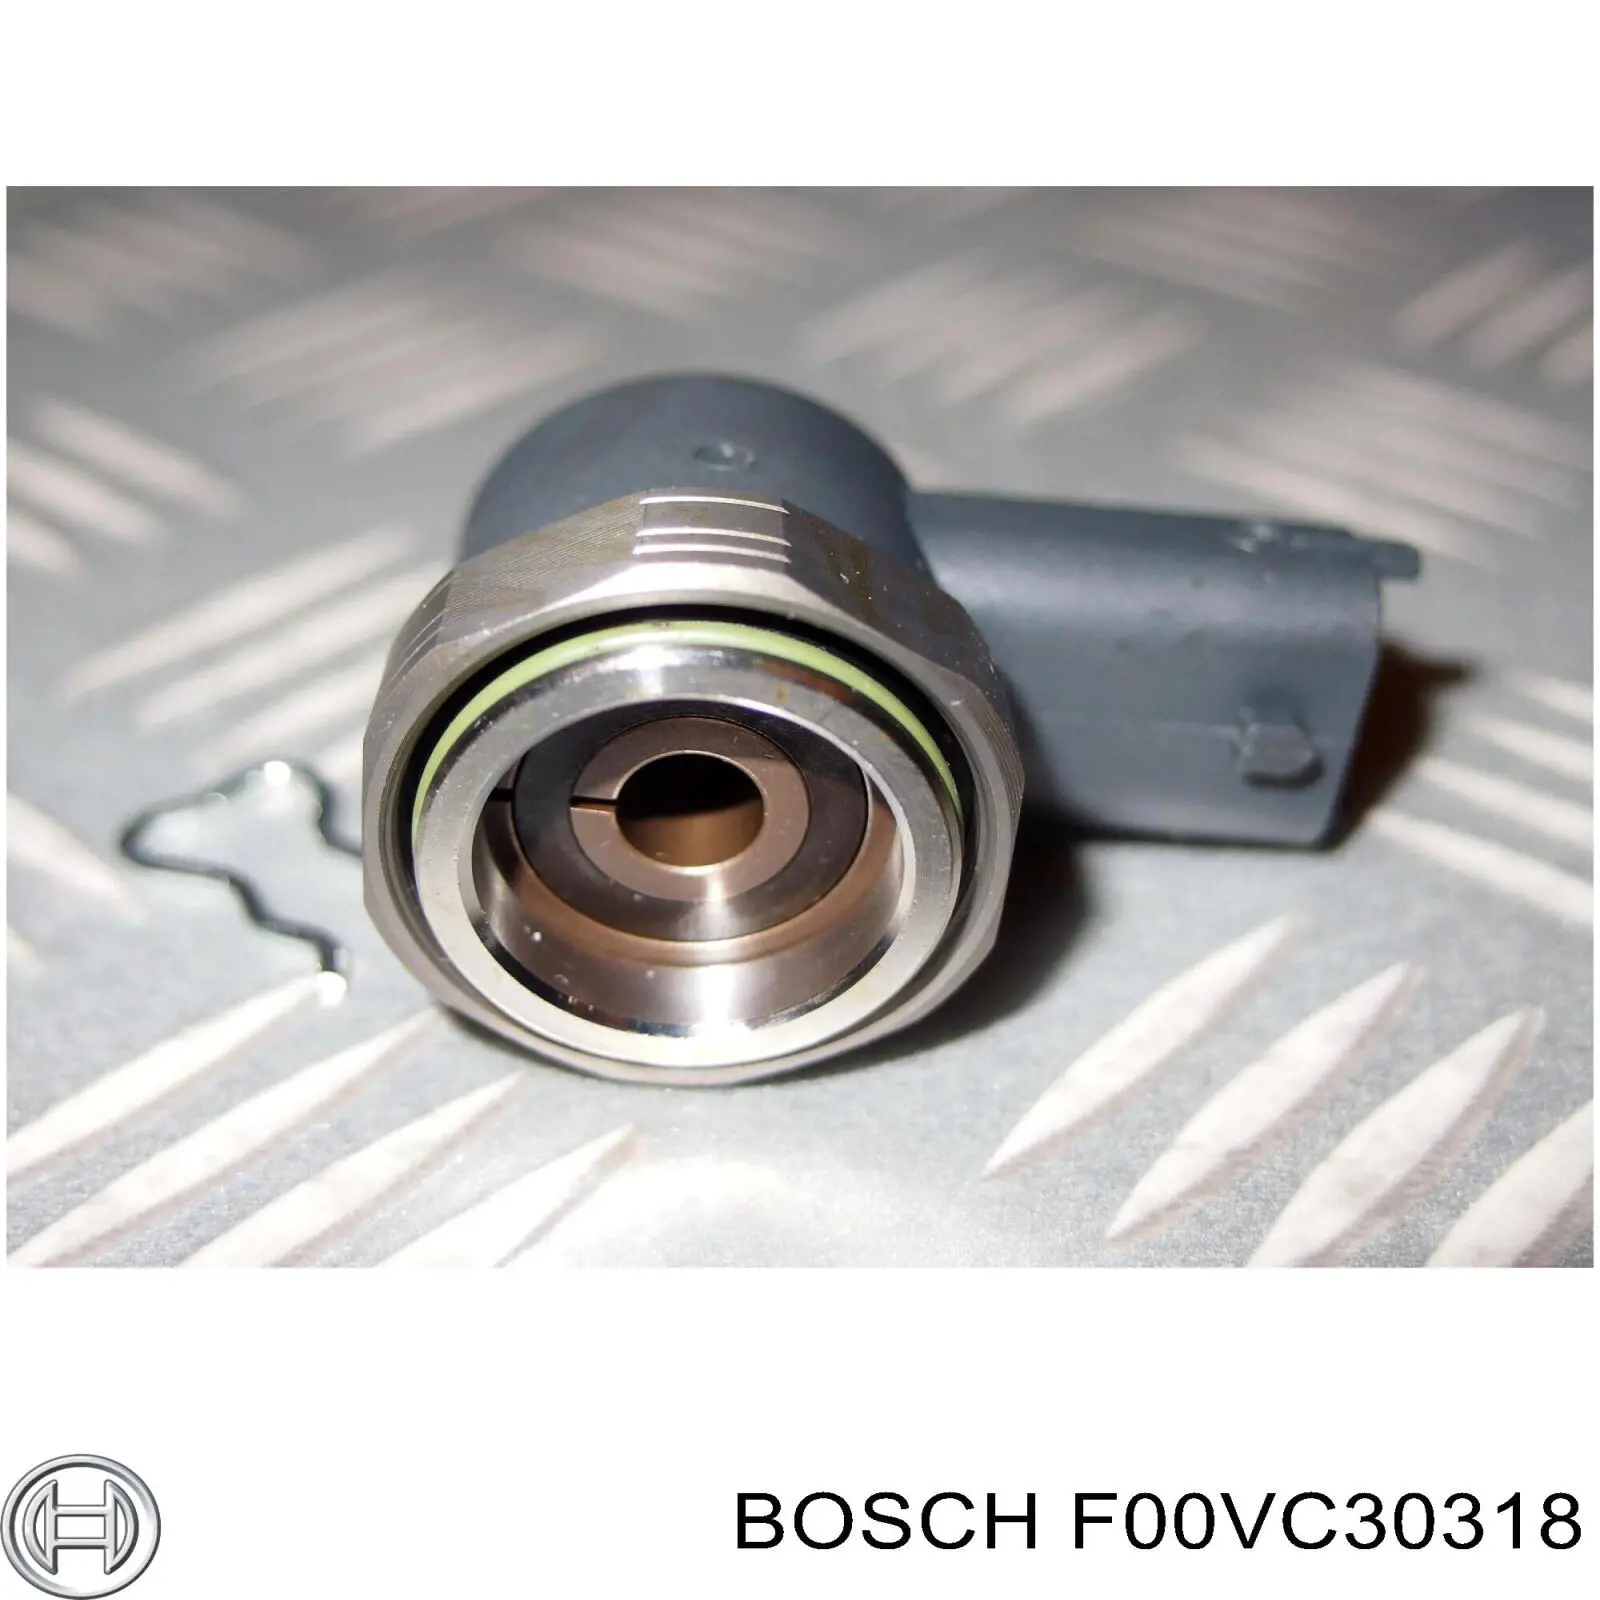 F00VC30318 Bosch ремкомплект форсунки